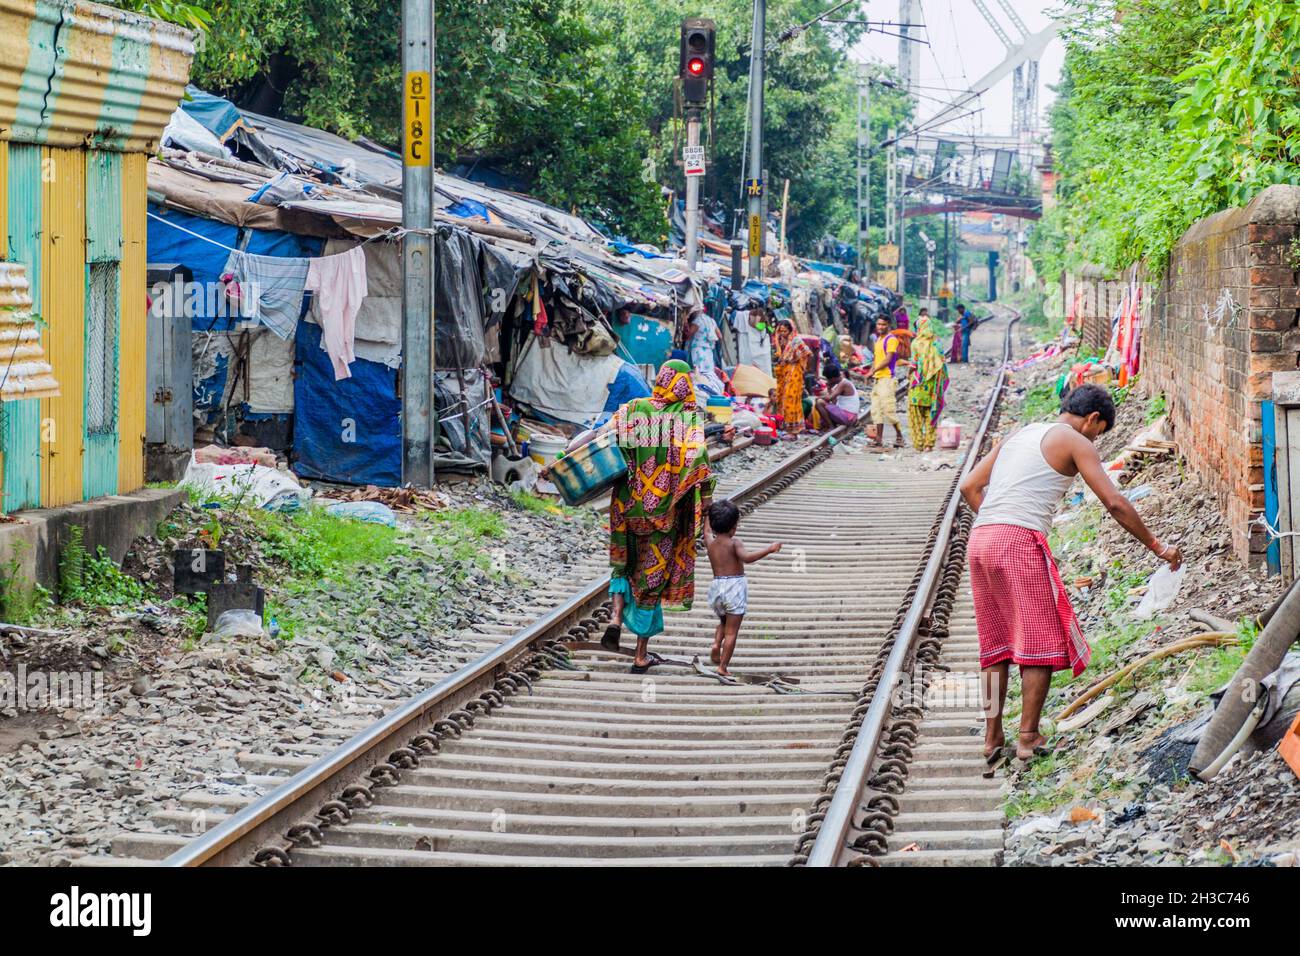 KOLKATA, INDIA - OCTOBER 31, 2016: Railway track and a slum in the center of Kolkata, India Stock Photo